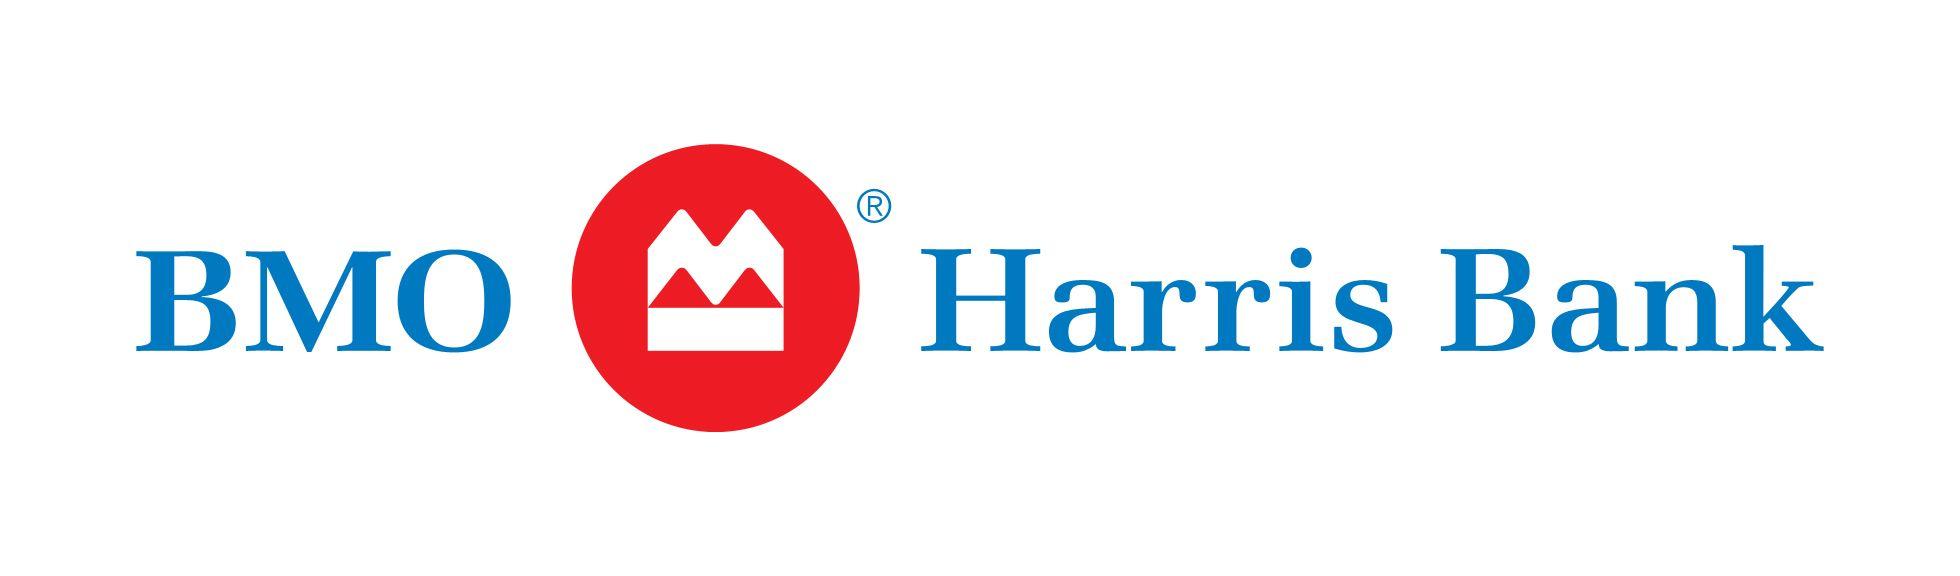 BMO Harris Logo - BMO-Harris-Bank-Logo-Color -